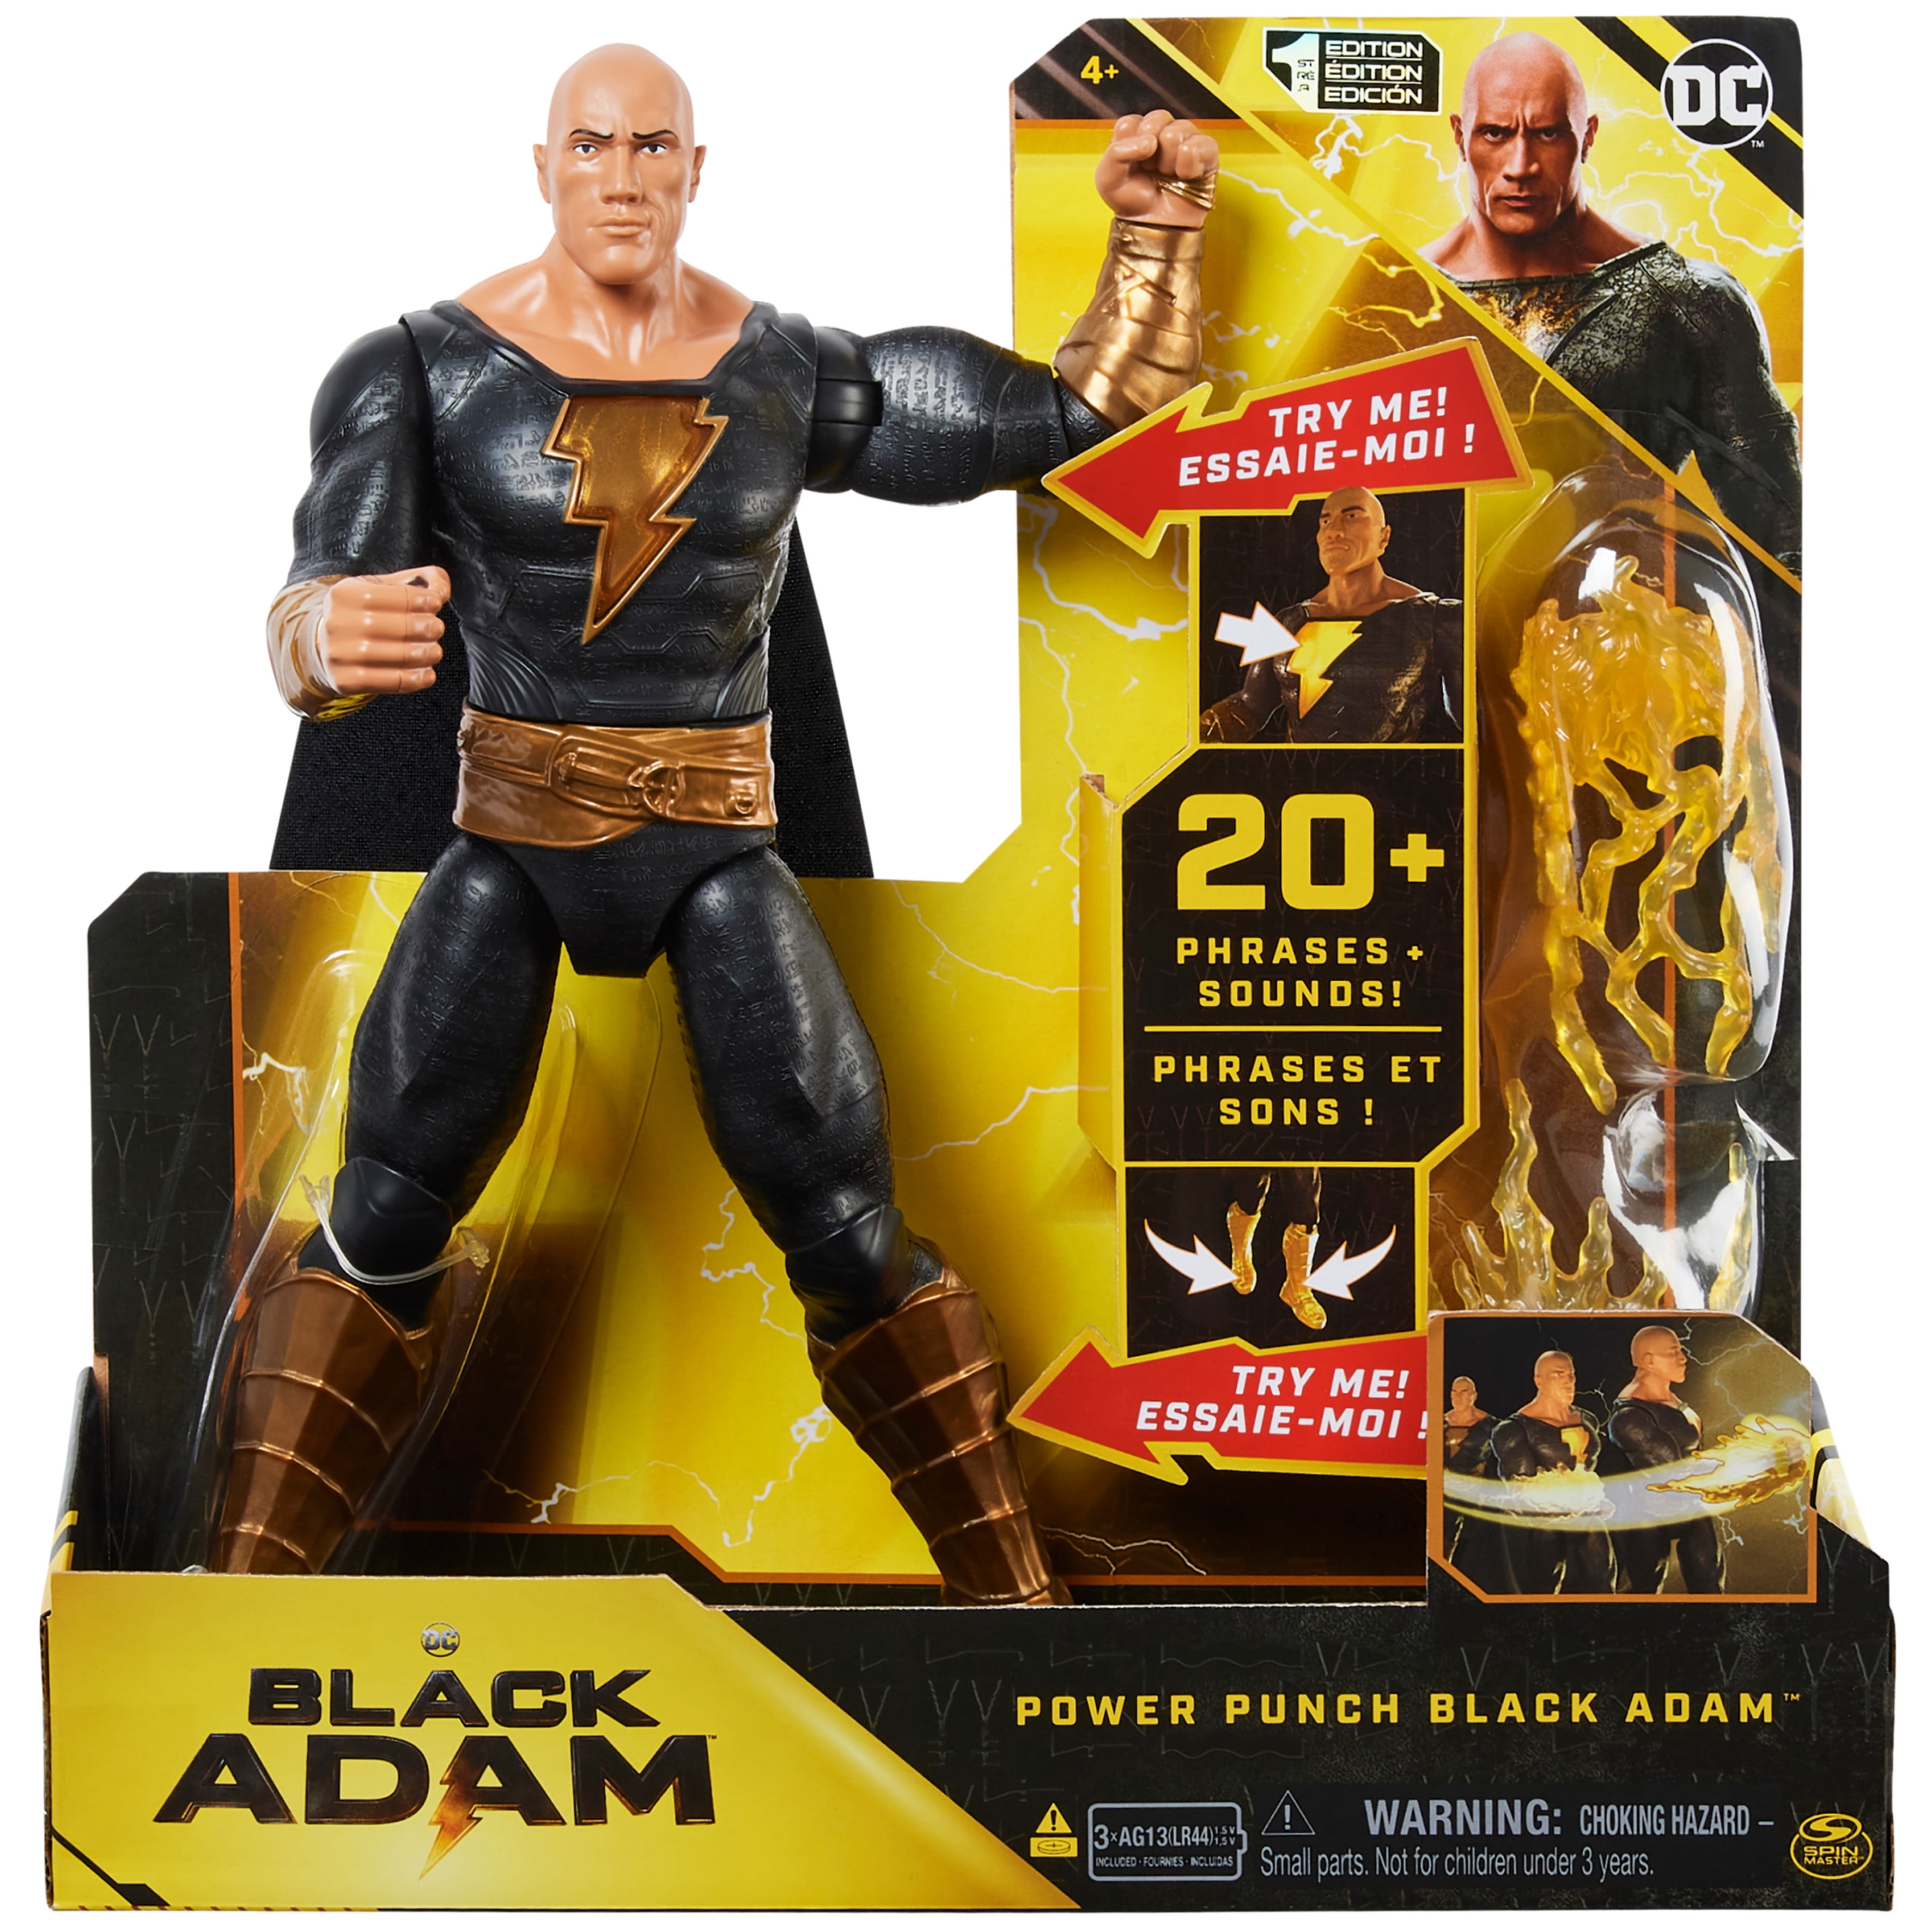 Is Black Adam A Hero or Villain? Resolved (2023 Updated)